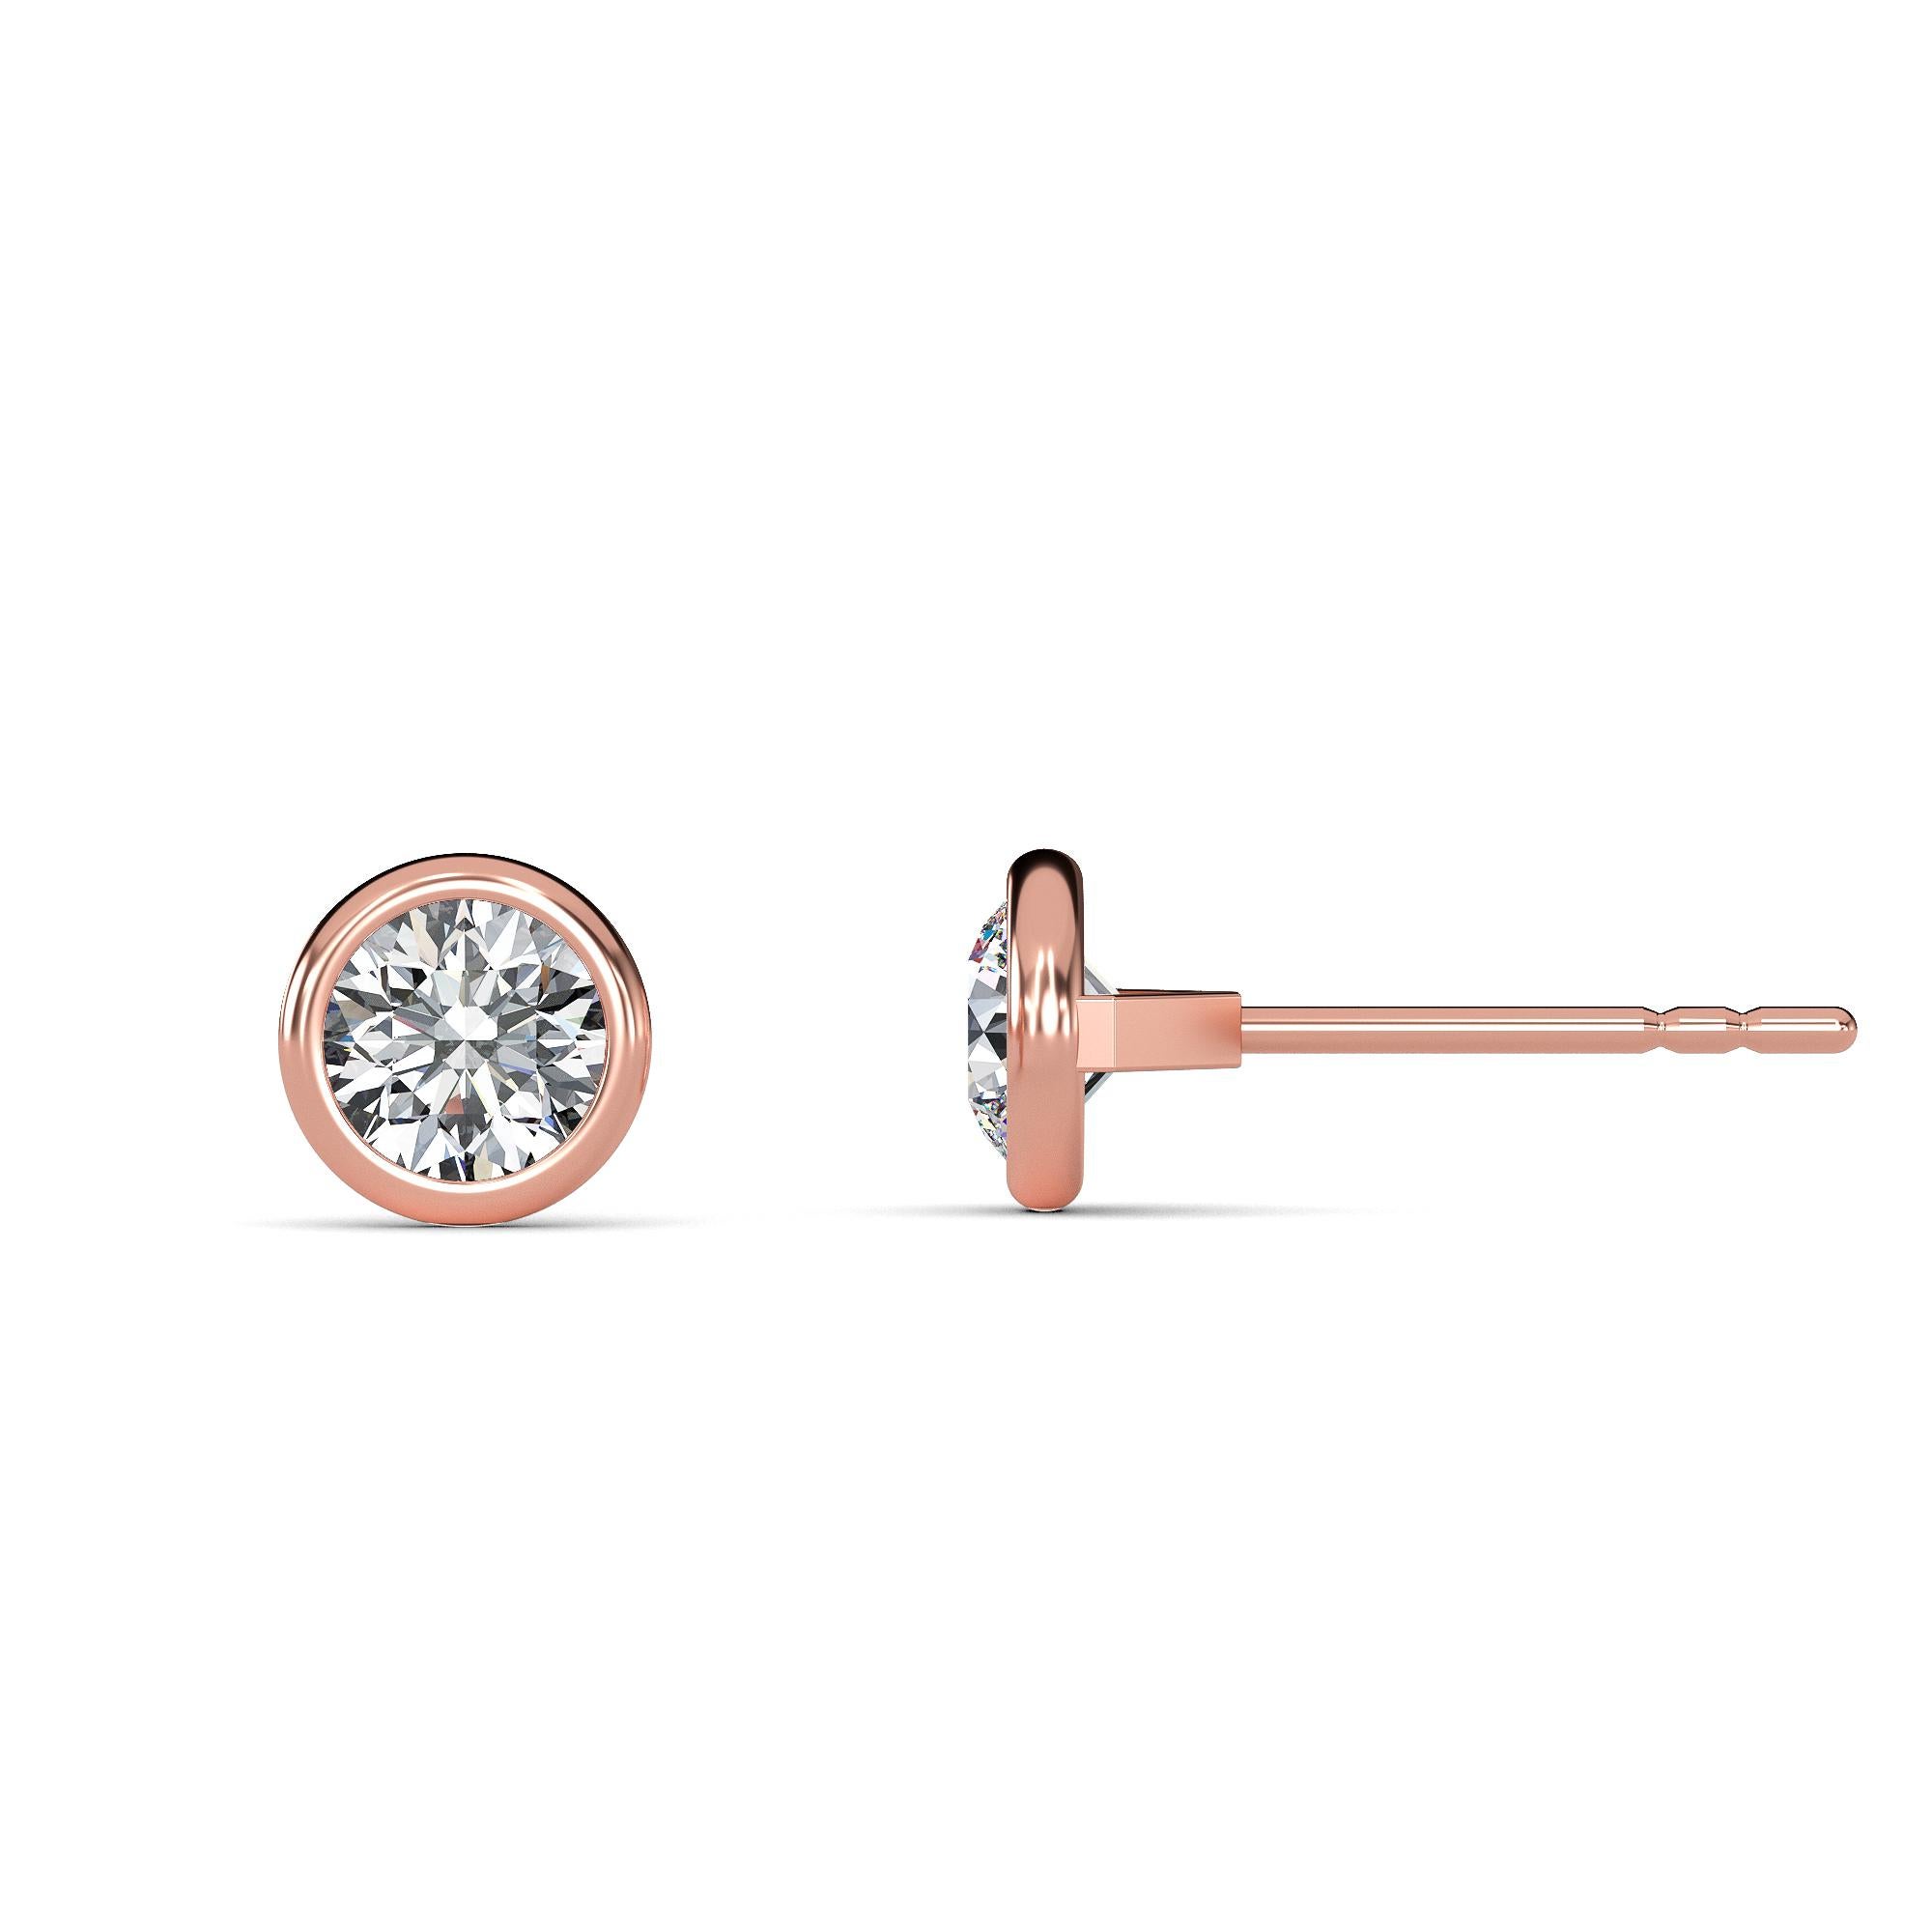 0.30 carat diamond earrings